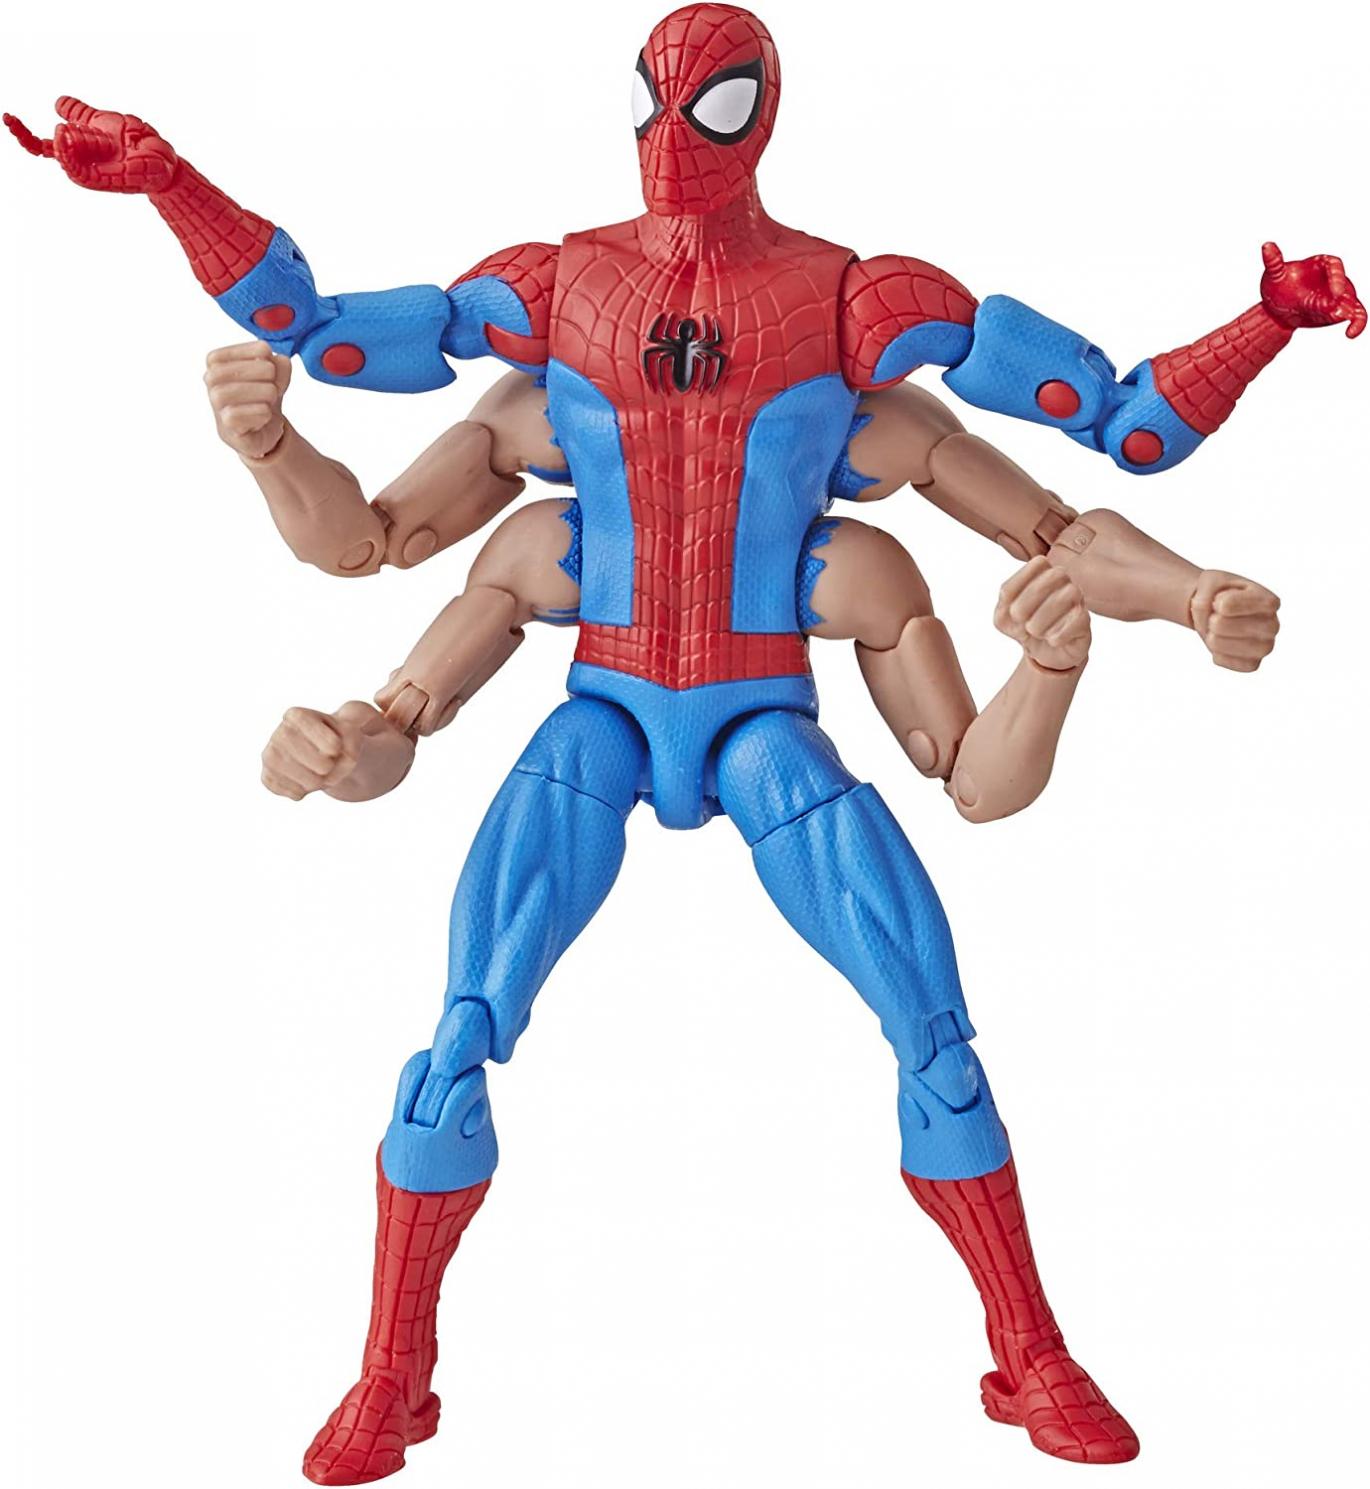 Spider-Man Legends Series 6" Six-Arm Toy